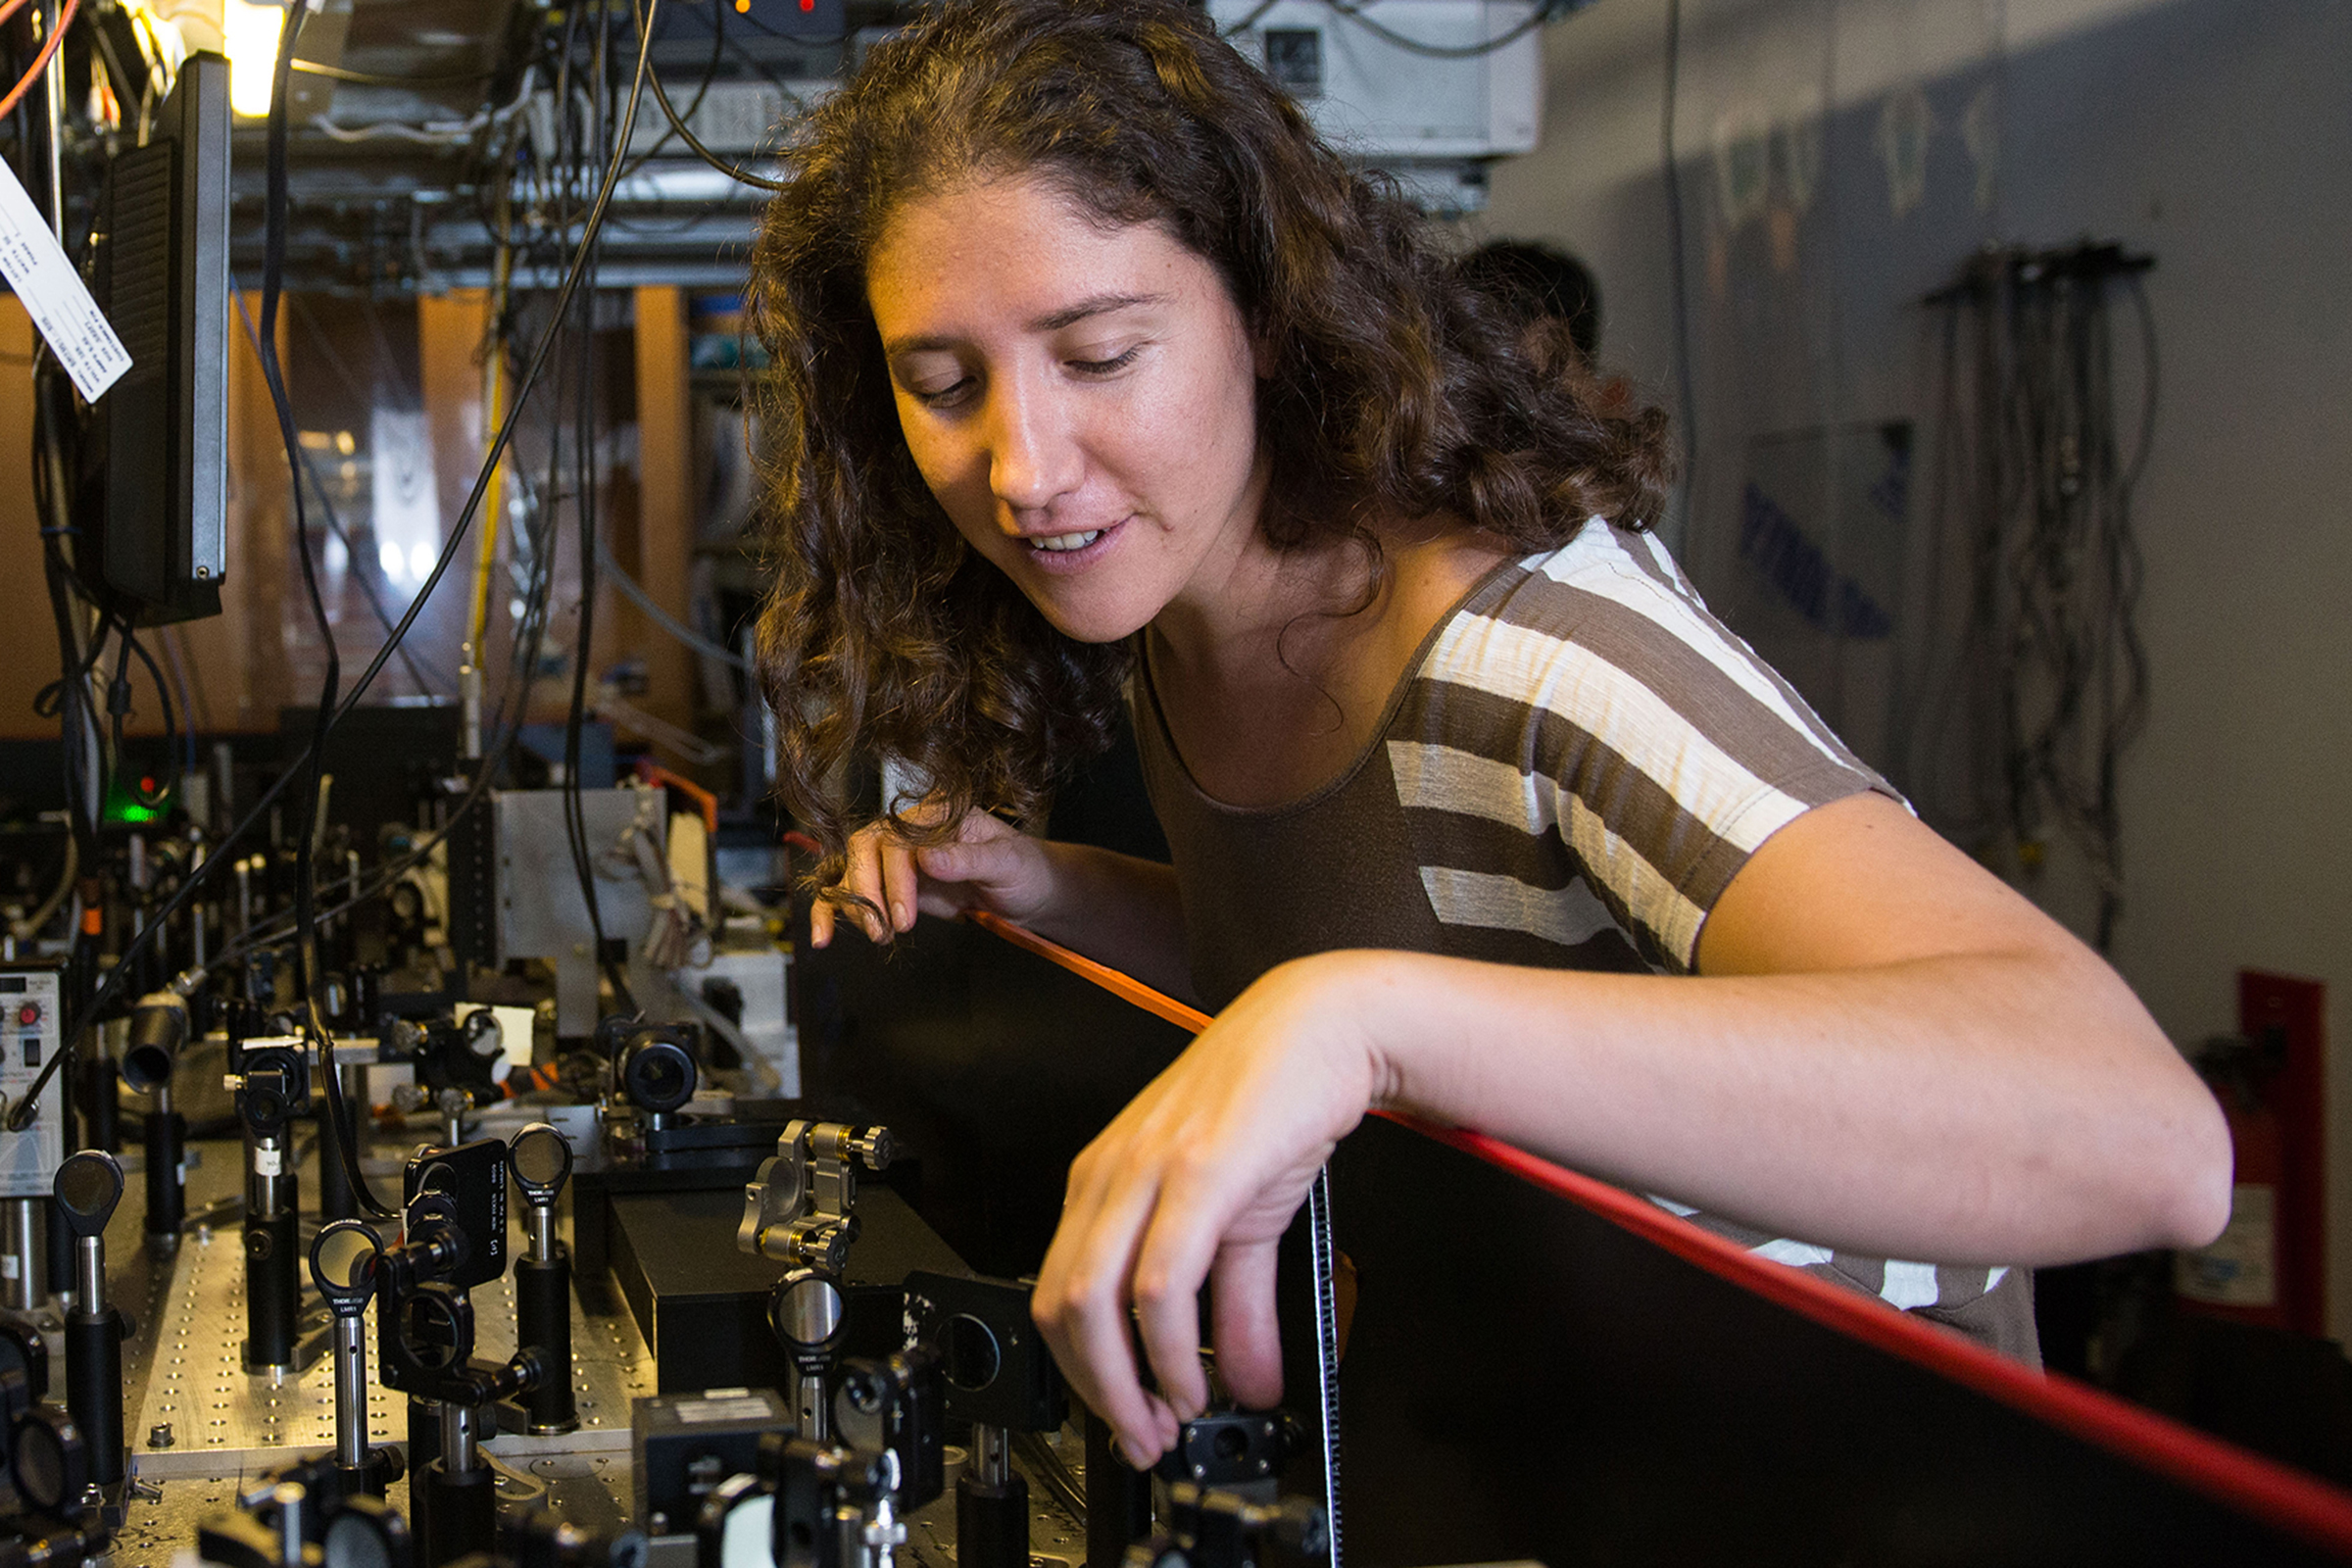 Physics graduate student adjusting laser equipment